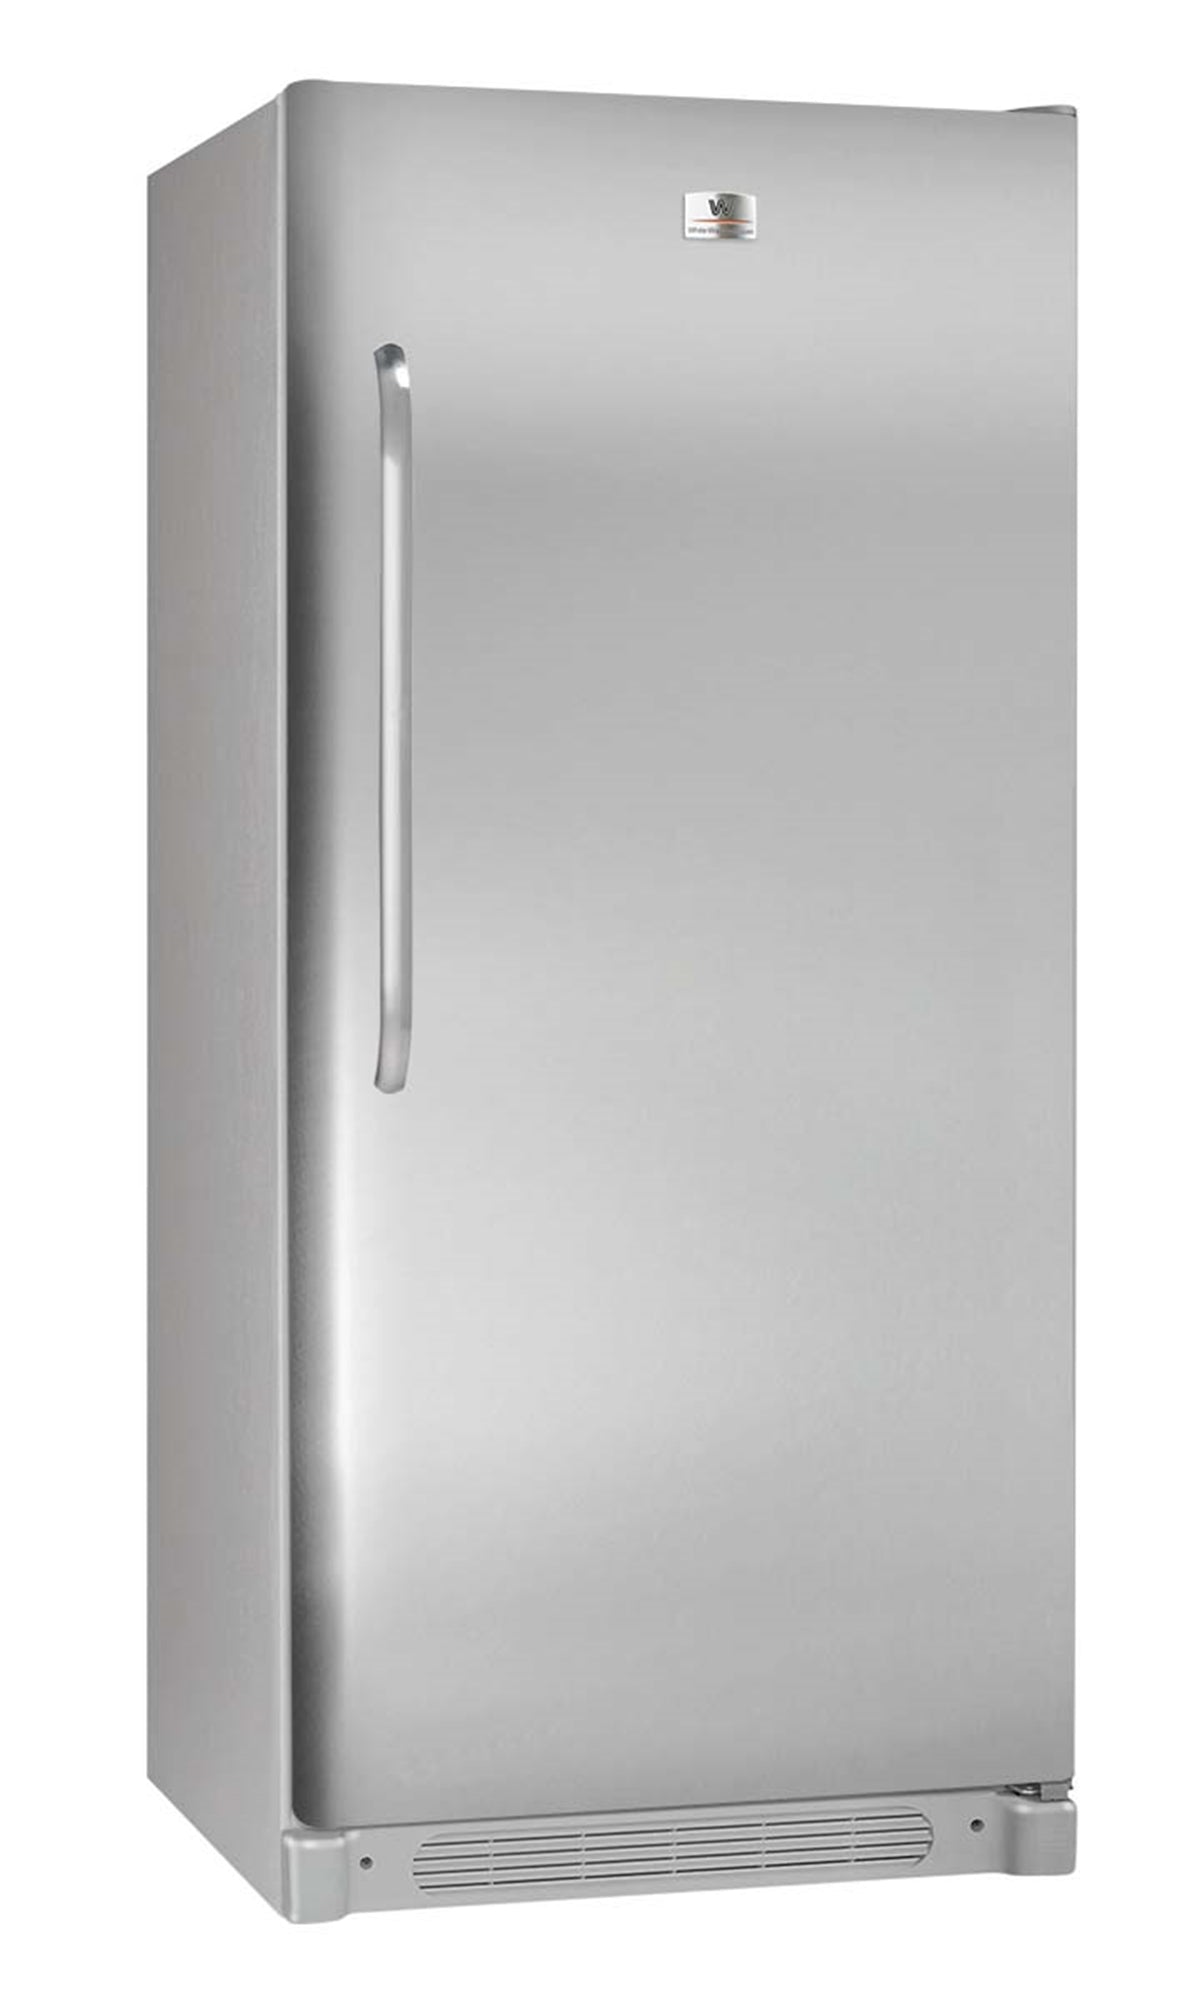 White Westinghouse Upright Refrigerator 581 Ltr - MRA21V7QS